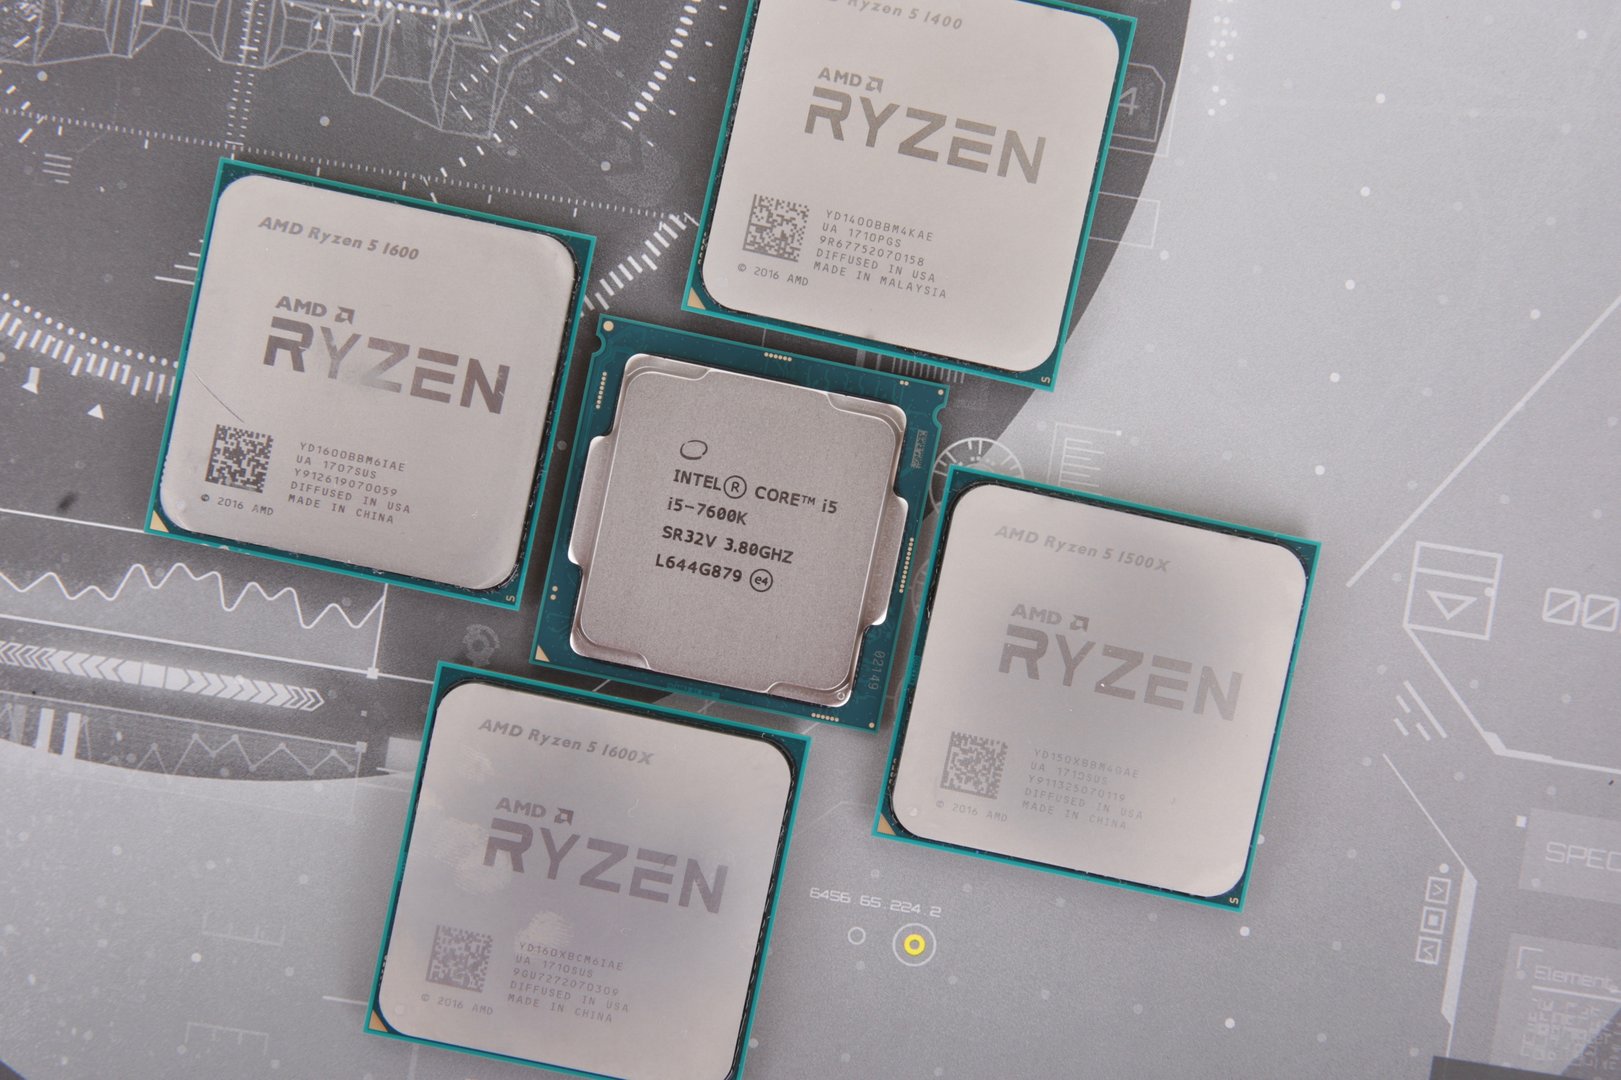 Ryzen 5 2600 память. AMD Ryzen 5 1500x. AMD Ryzen 5 1500x Quad-Core Processor. AMD Ryzen 5 1500x Quad-Core Processor 3.50 GHZ. AMD Ryzen 5 1600x Six-Core Processor 3.60 GHZ.